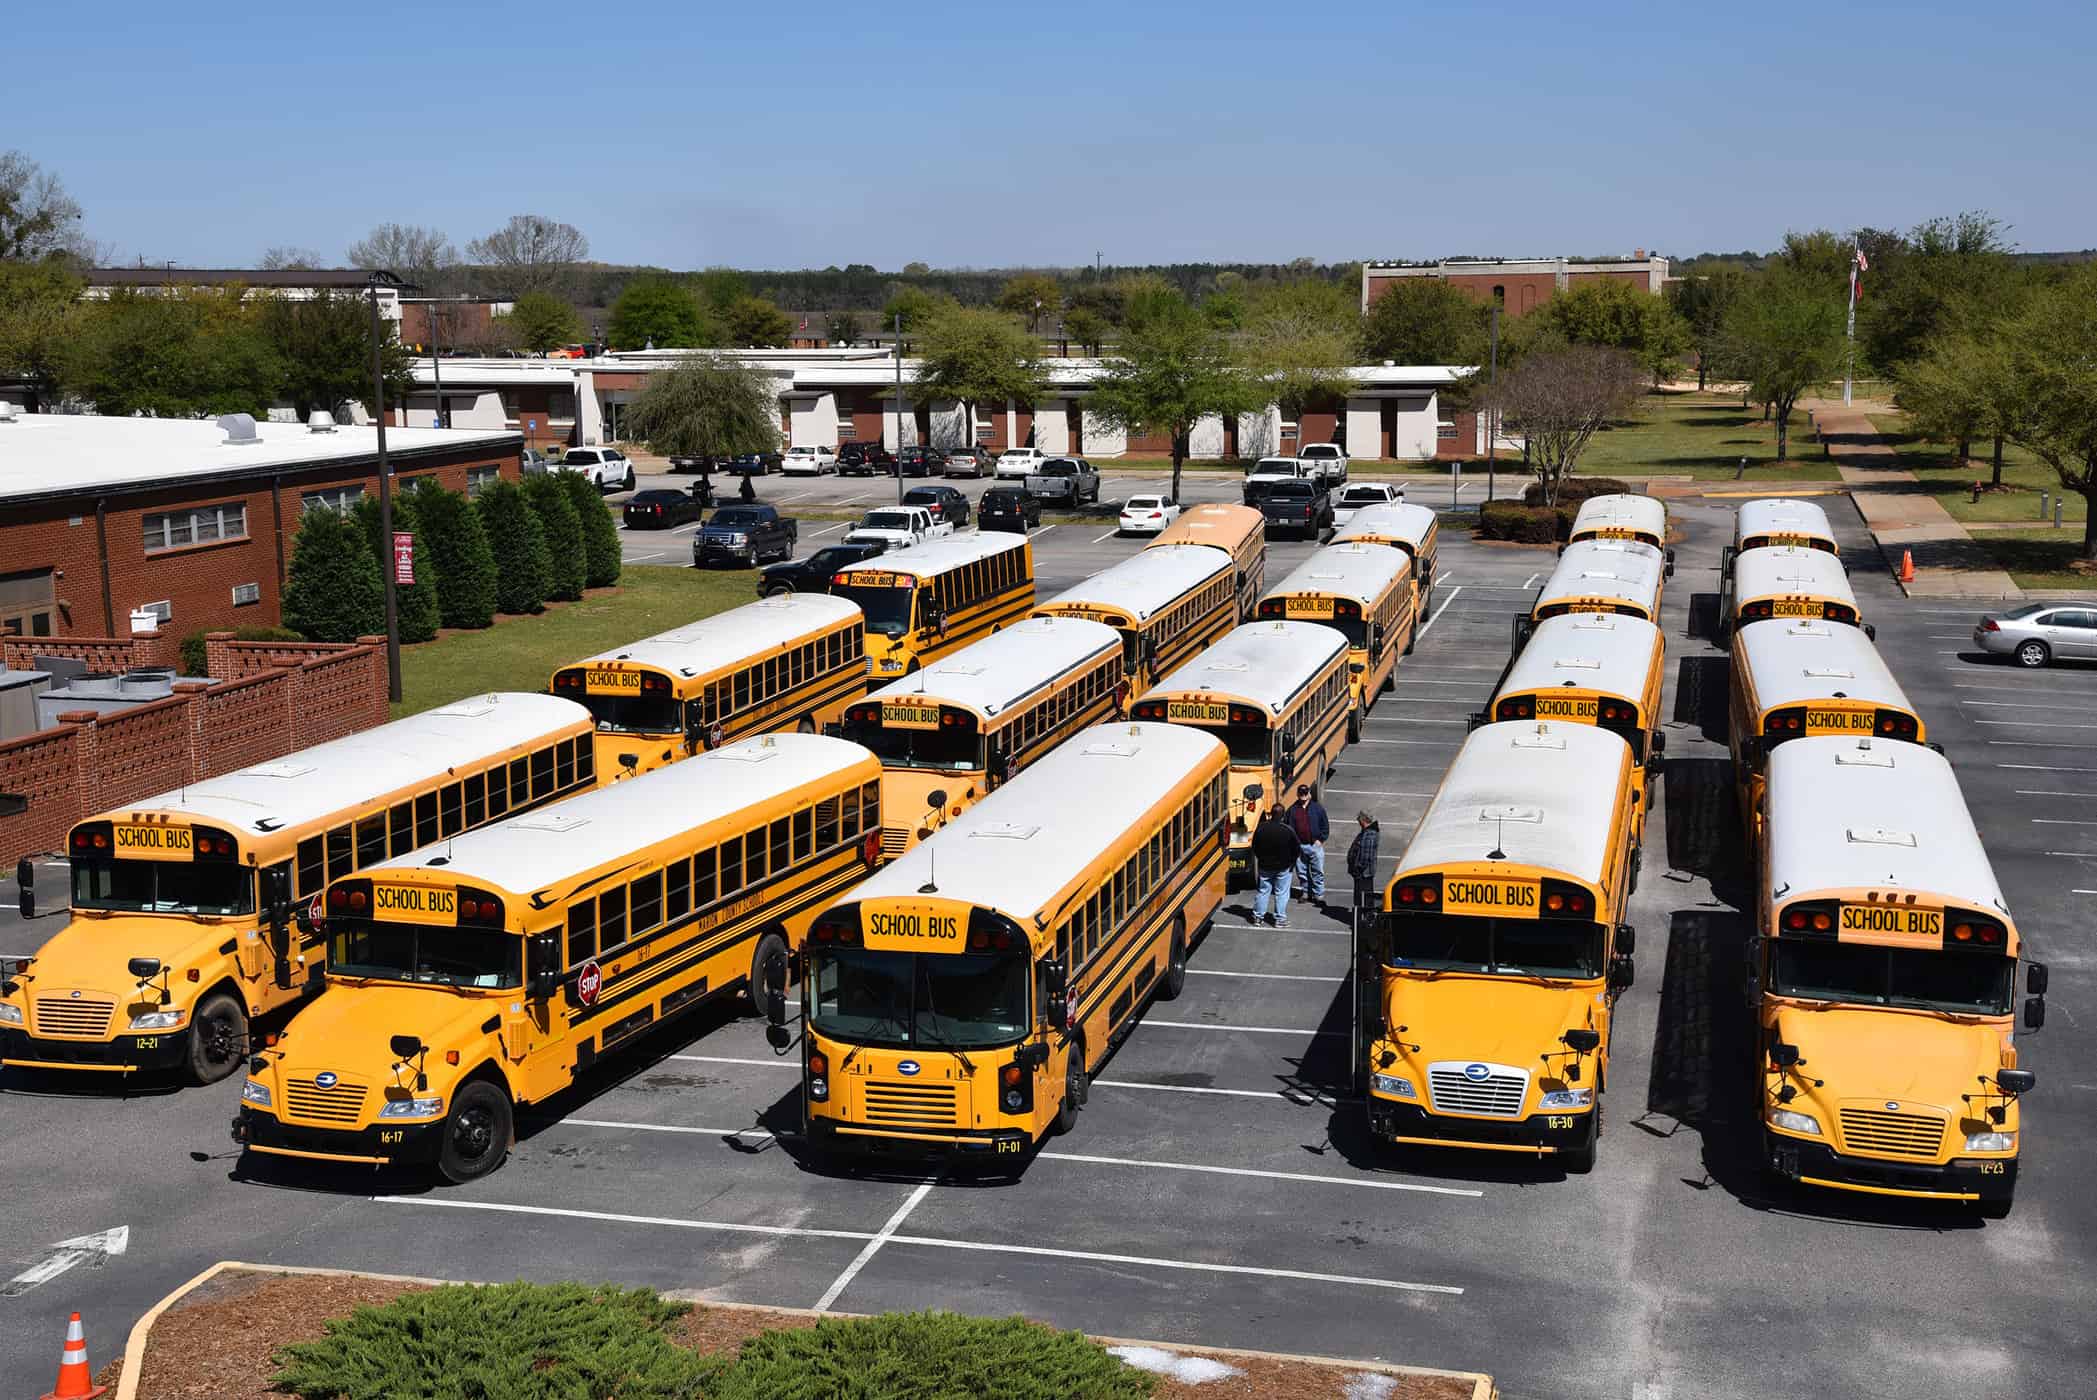 19 school buses sit in a parking lot.